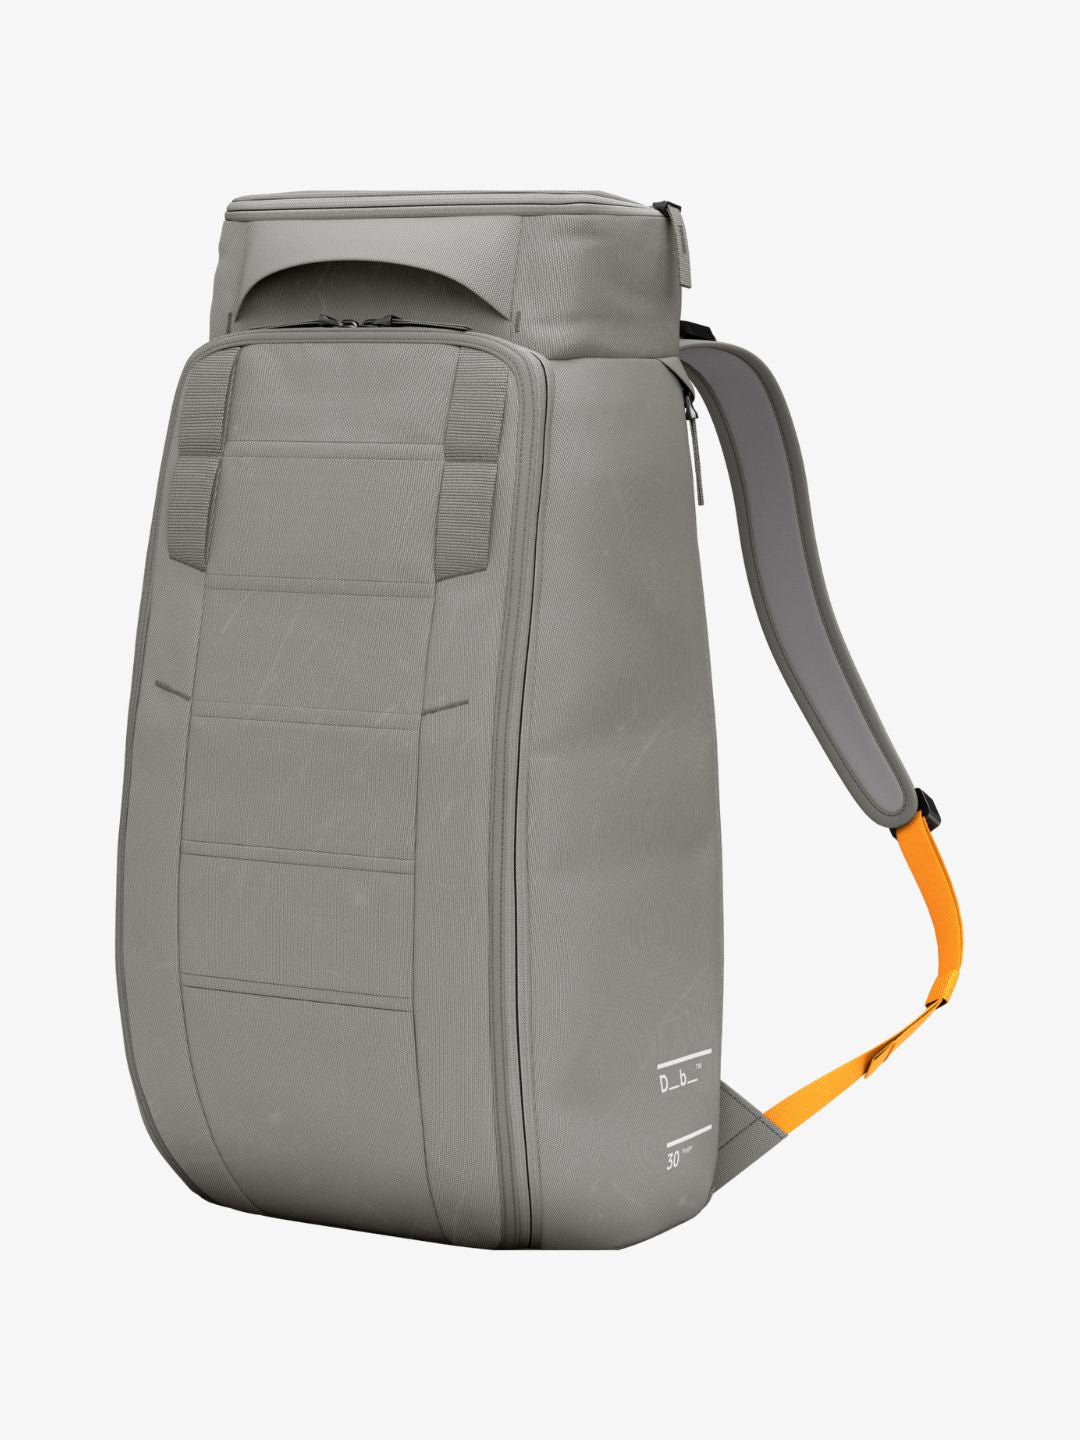 Db The Hugger Backpack 30L Sand Grey